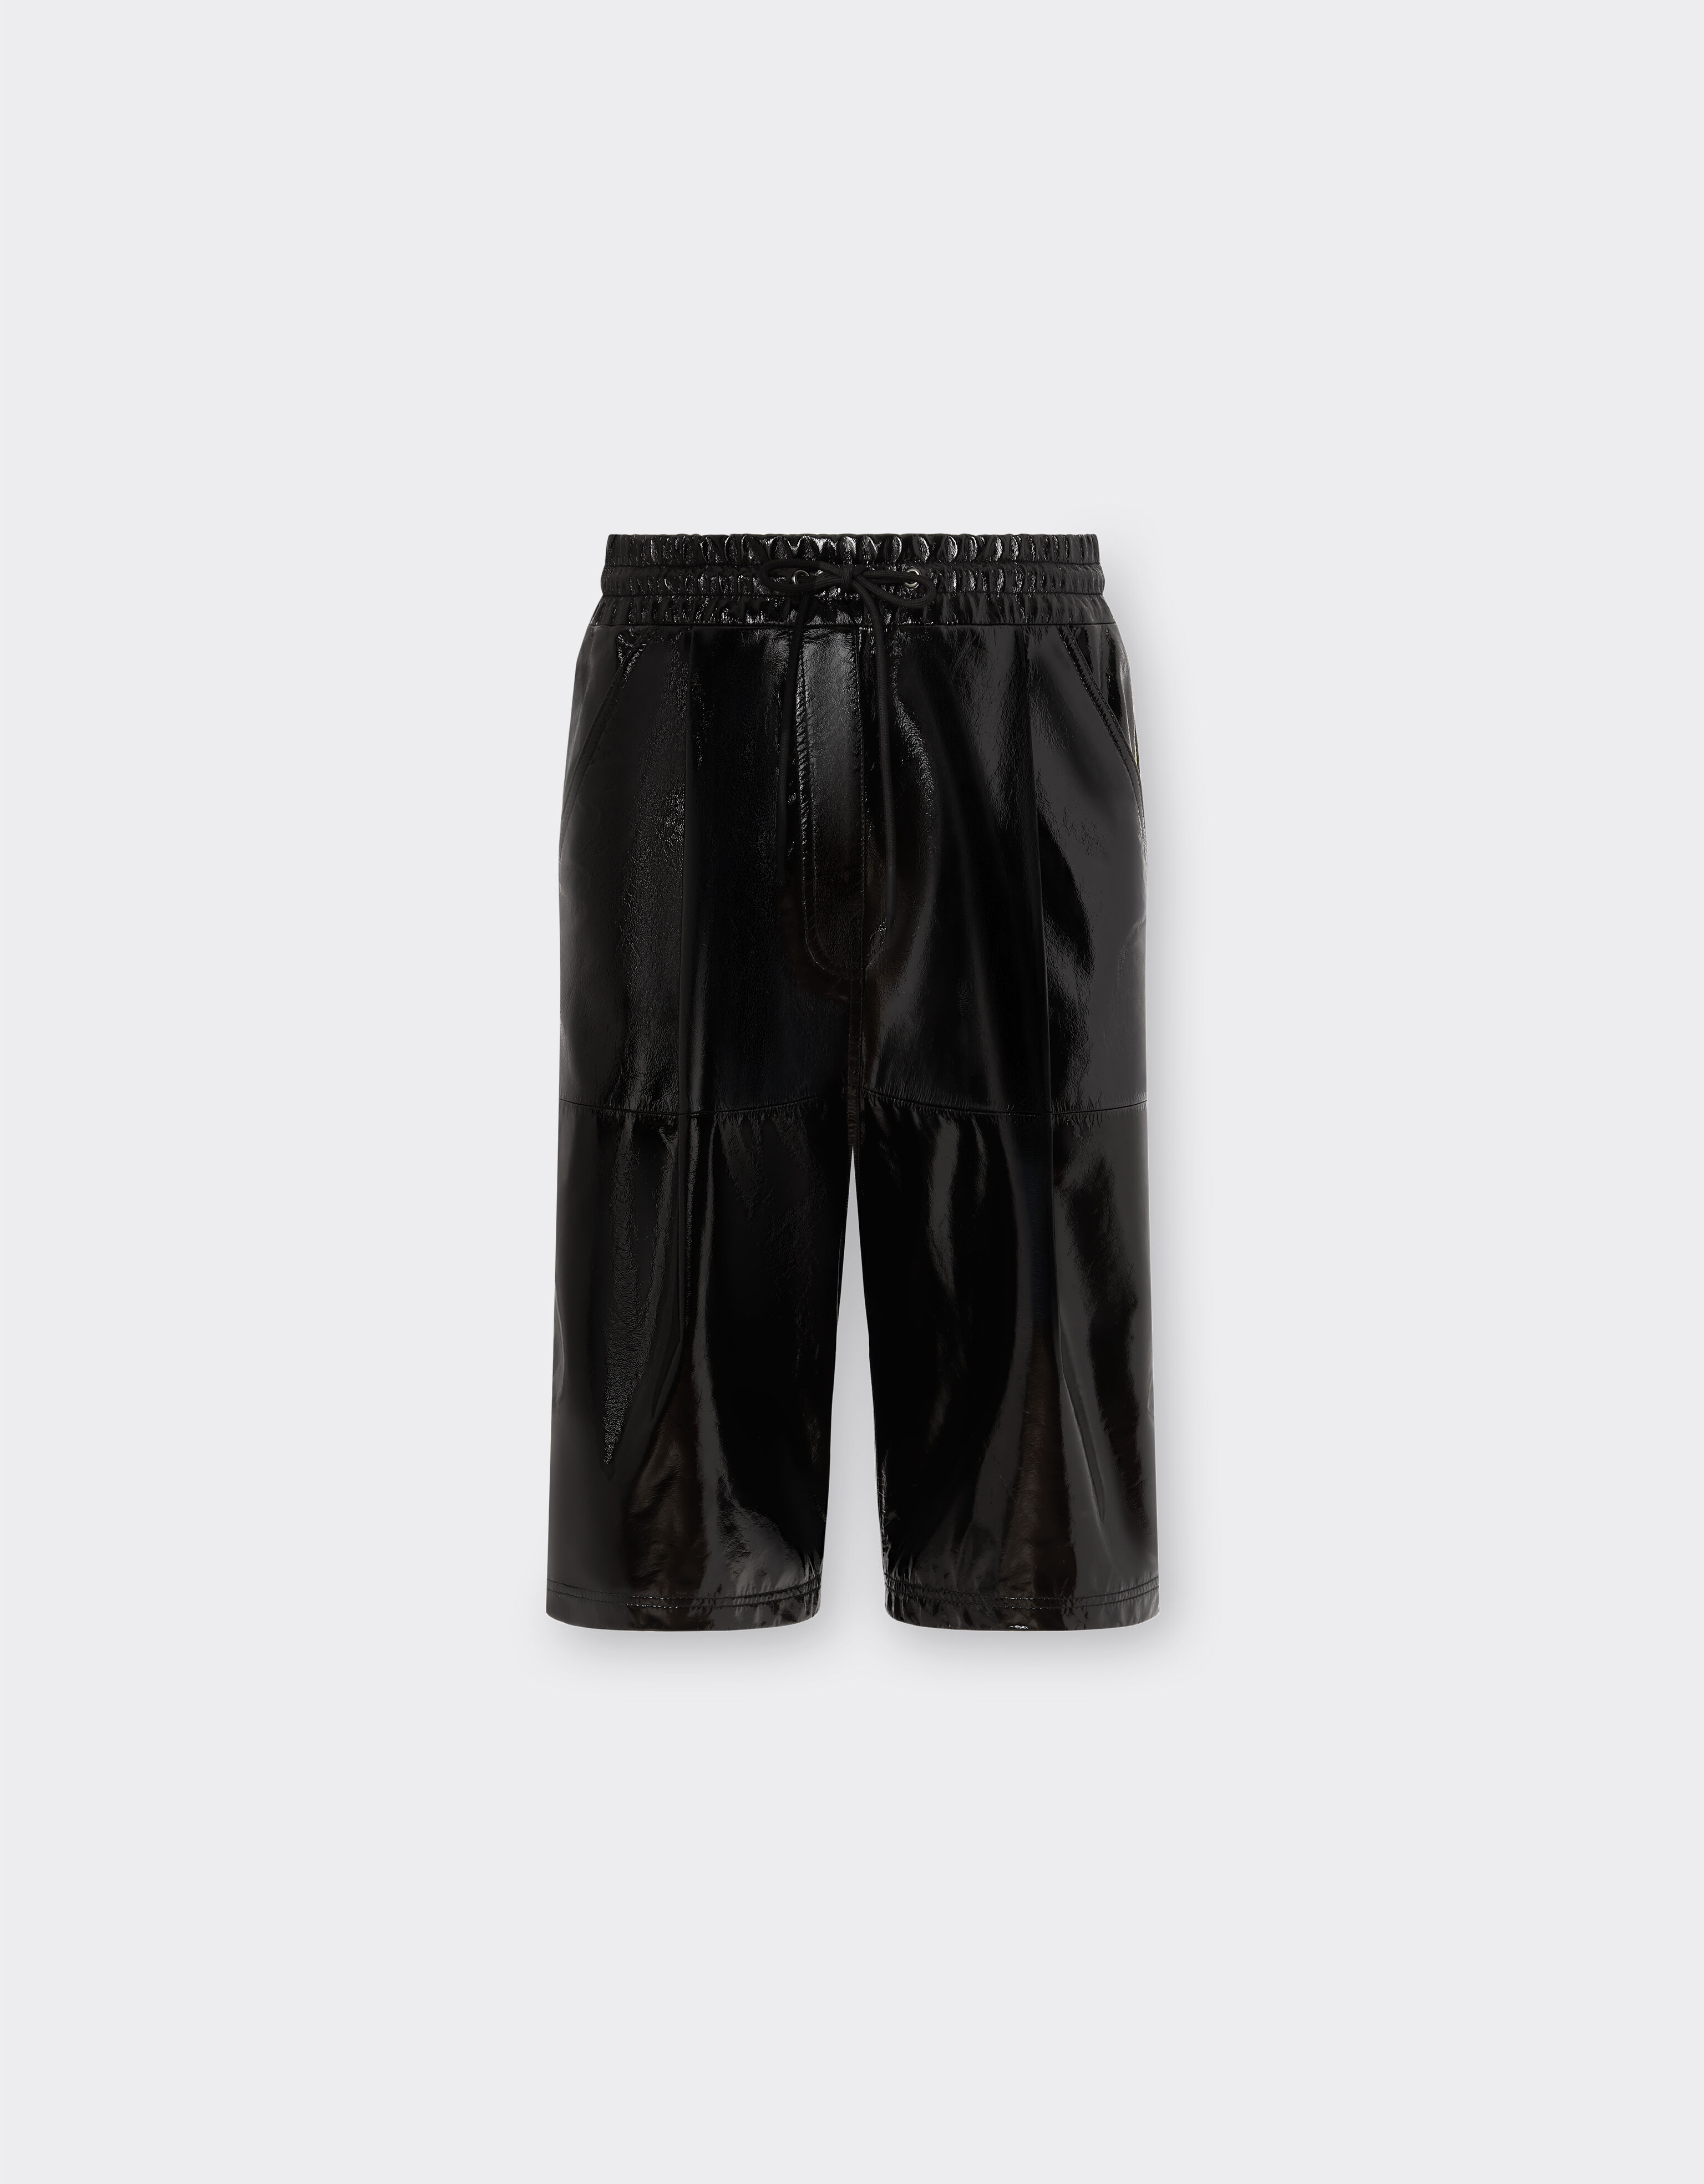 Ferrari Pantalones bermudas de piel acharolada con cinta de grogrén 3D Negro 20516f